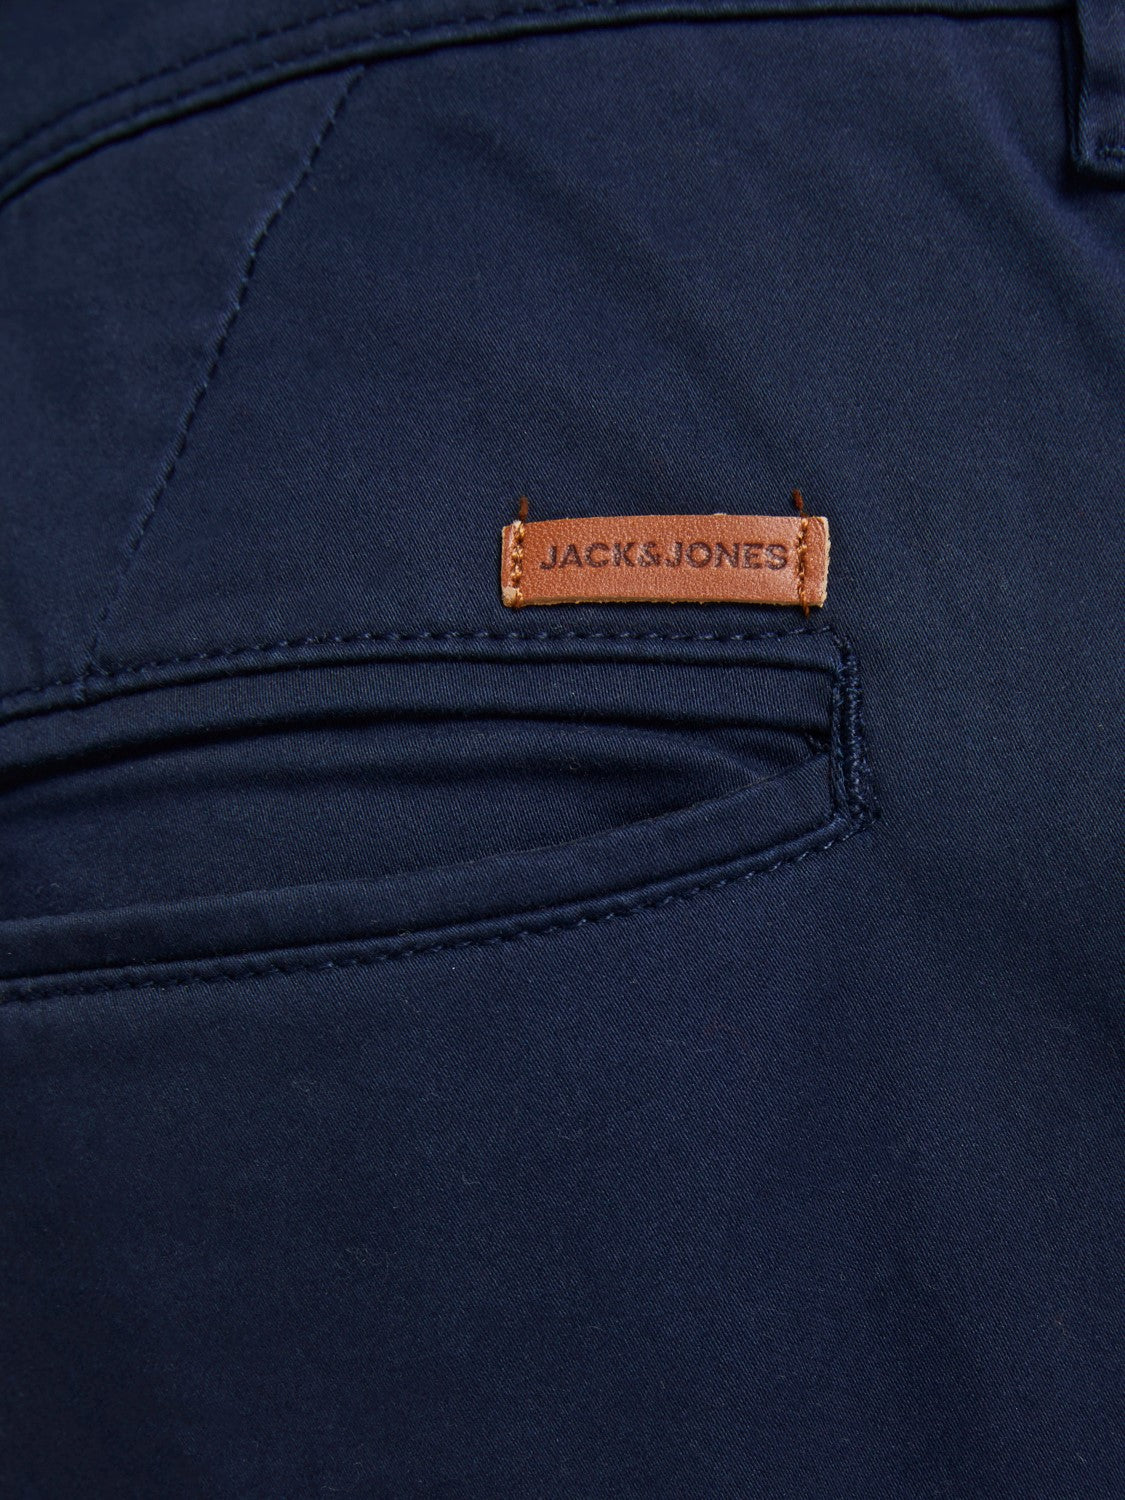 Jack & Jones Mens Bowie Chino Shorts, 06, 12165604, Navy Blazer